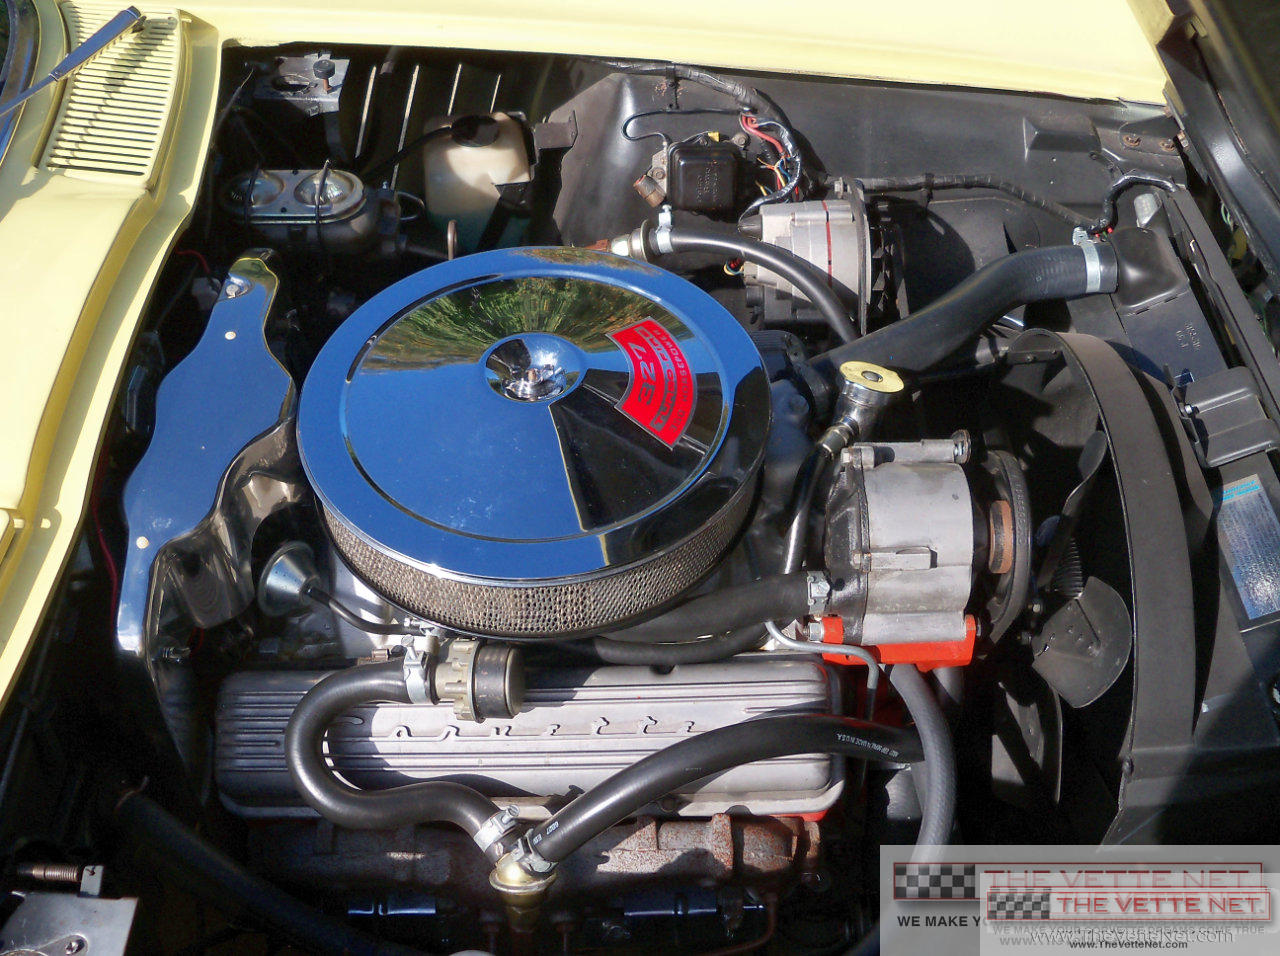 1967 Corvette Coupe Sunfire Yellow Matches code